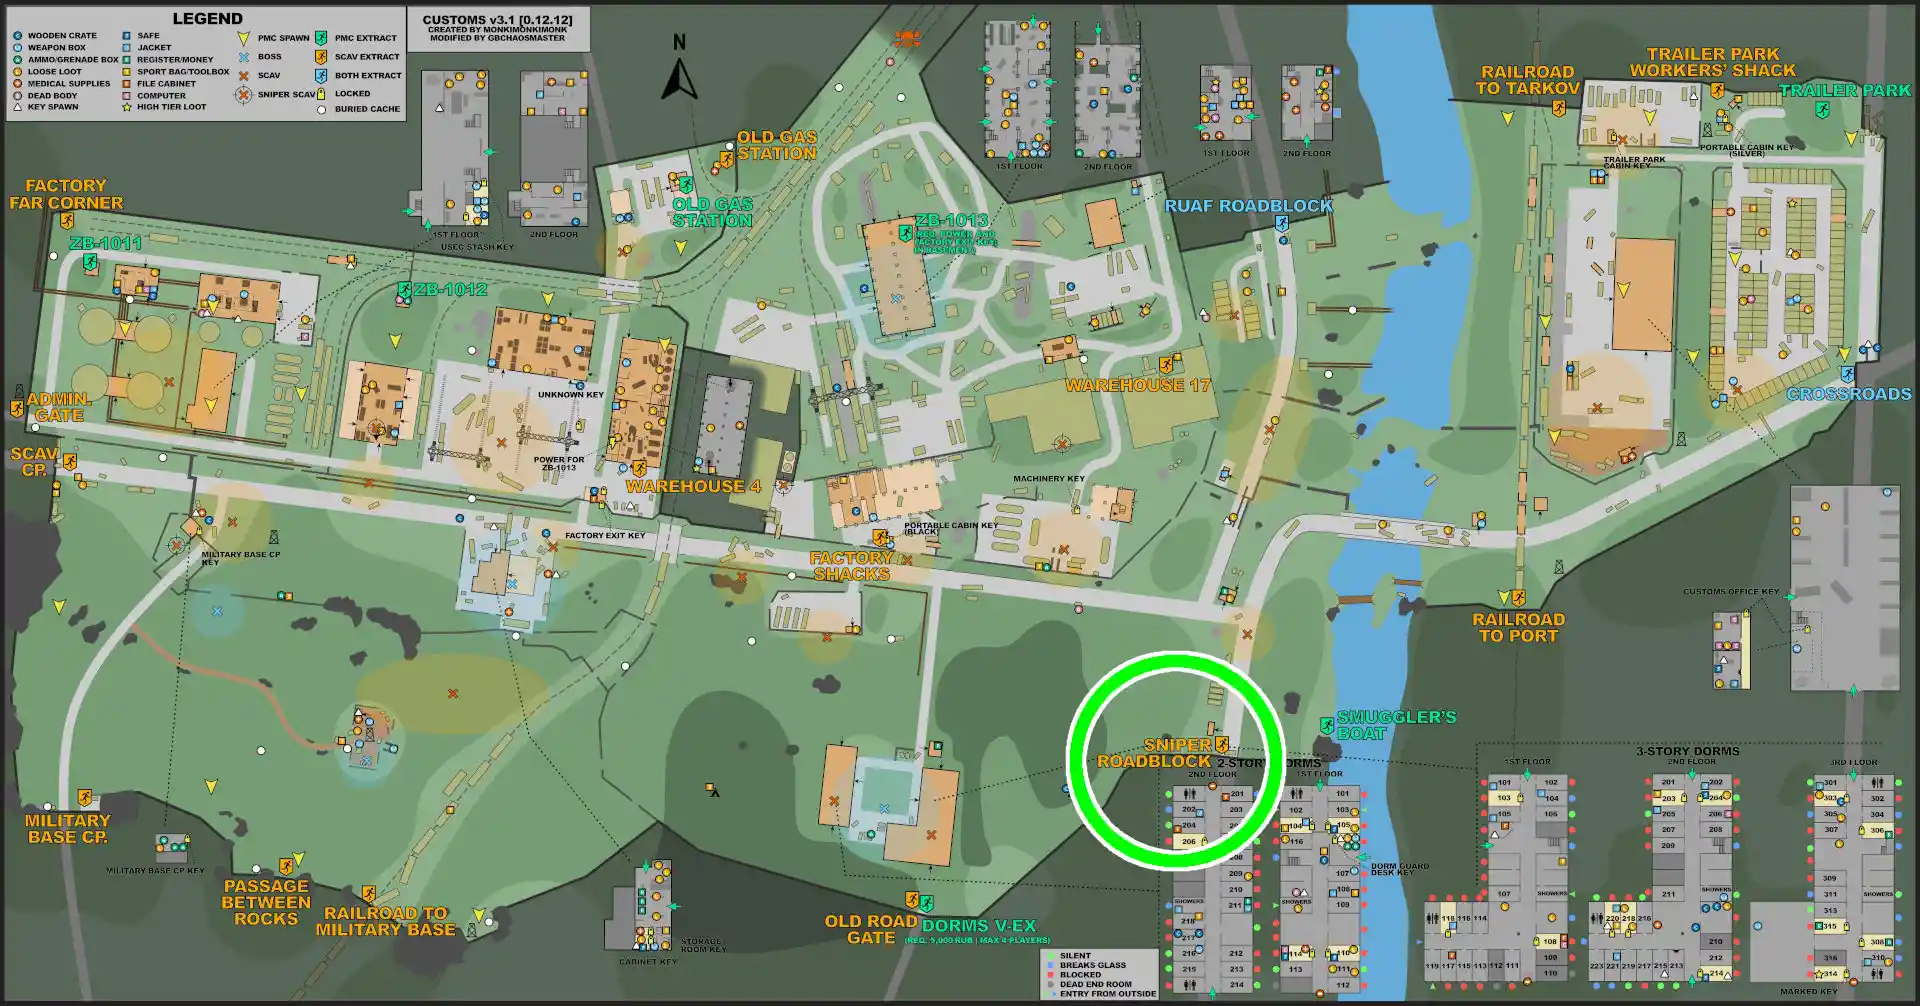 CUSTOMS-ESC-Sniper_Roadblock-MAP.jpg